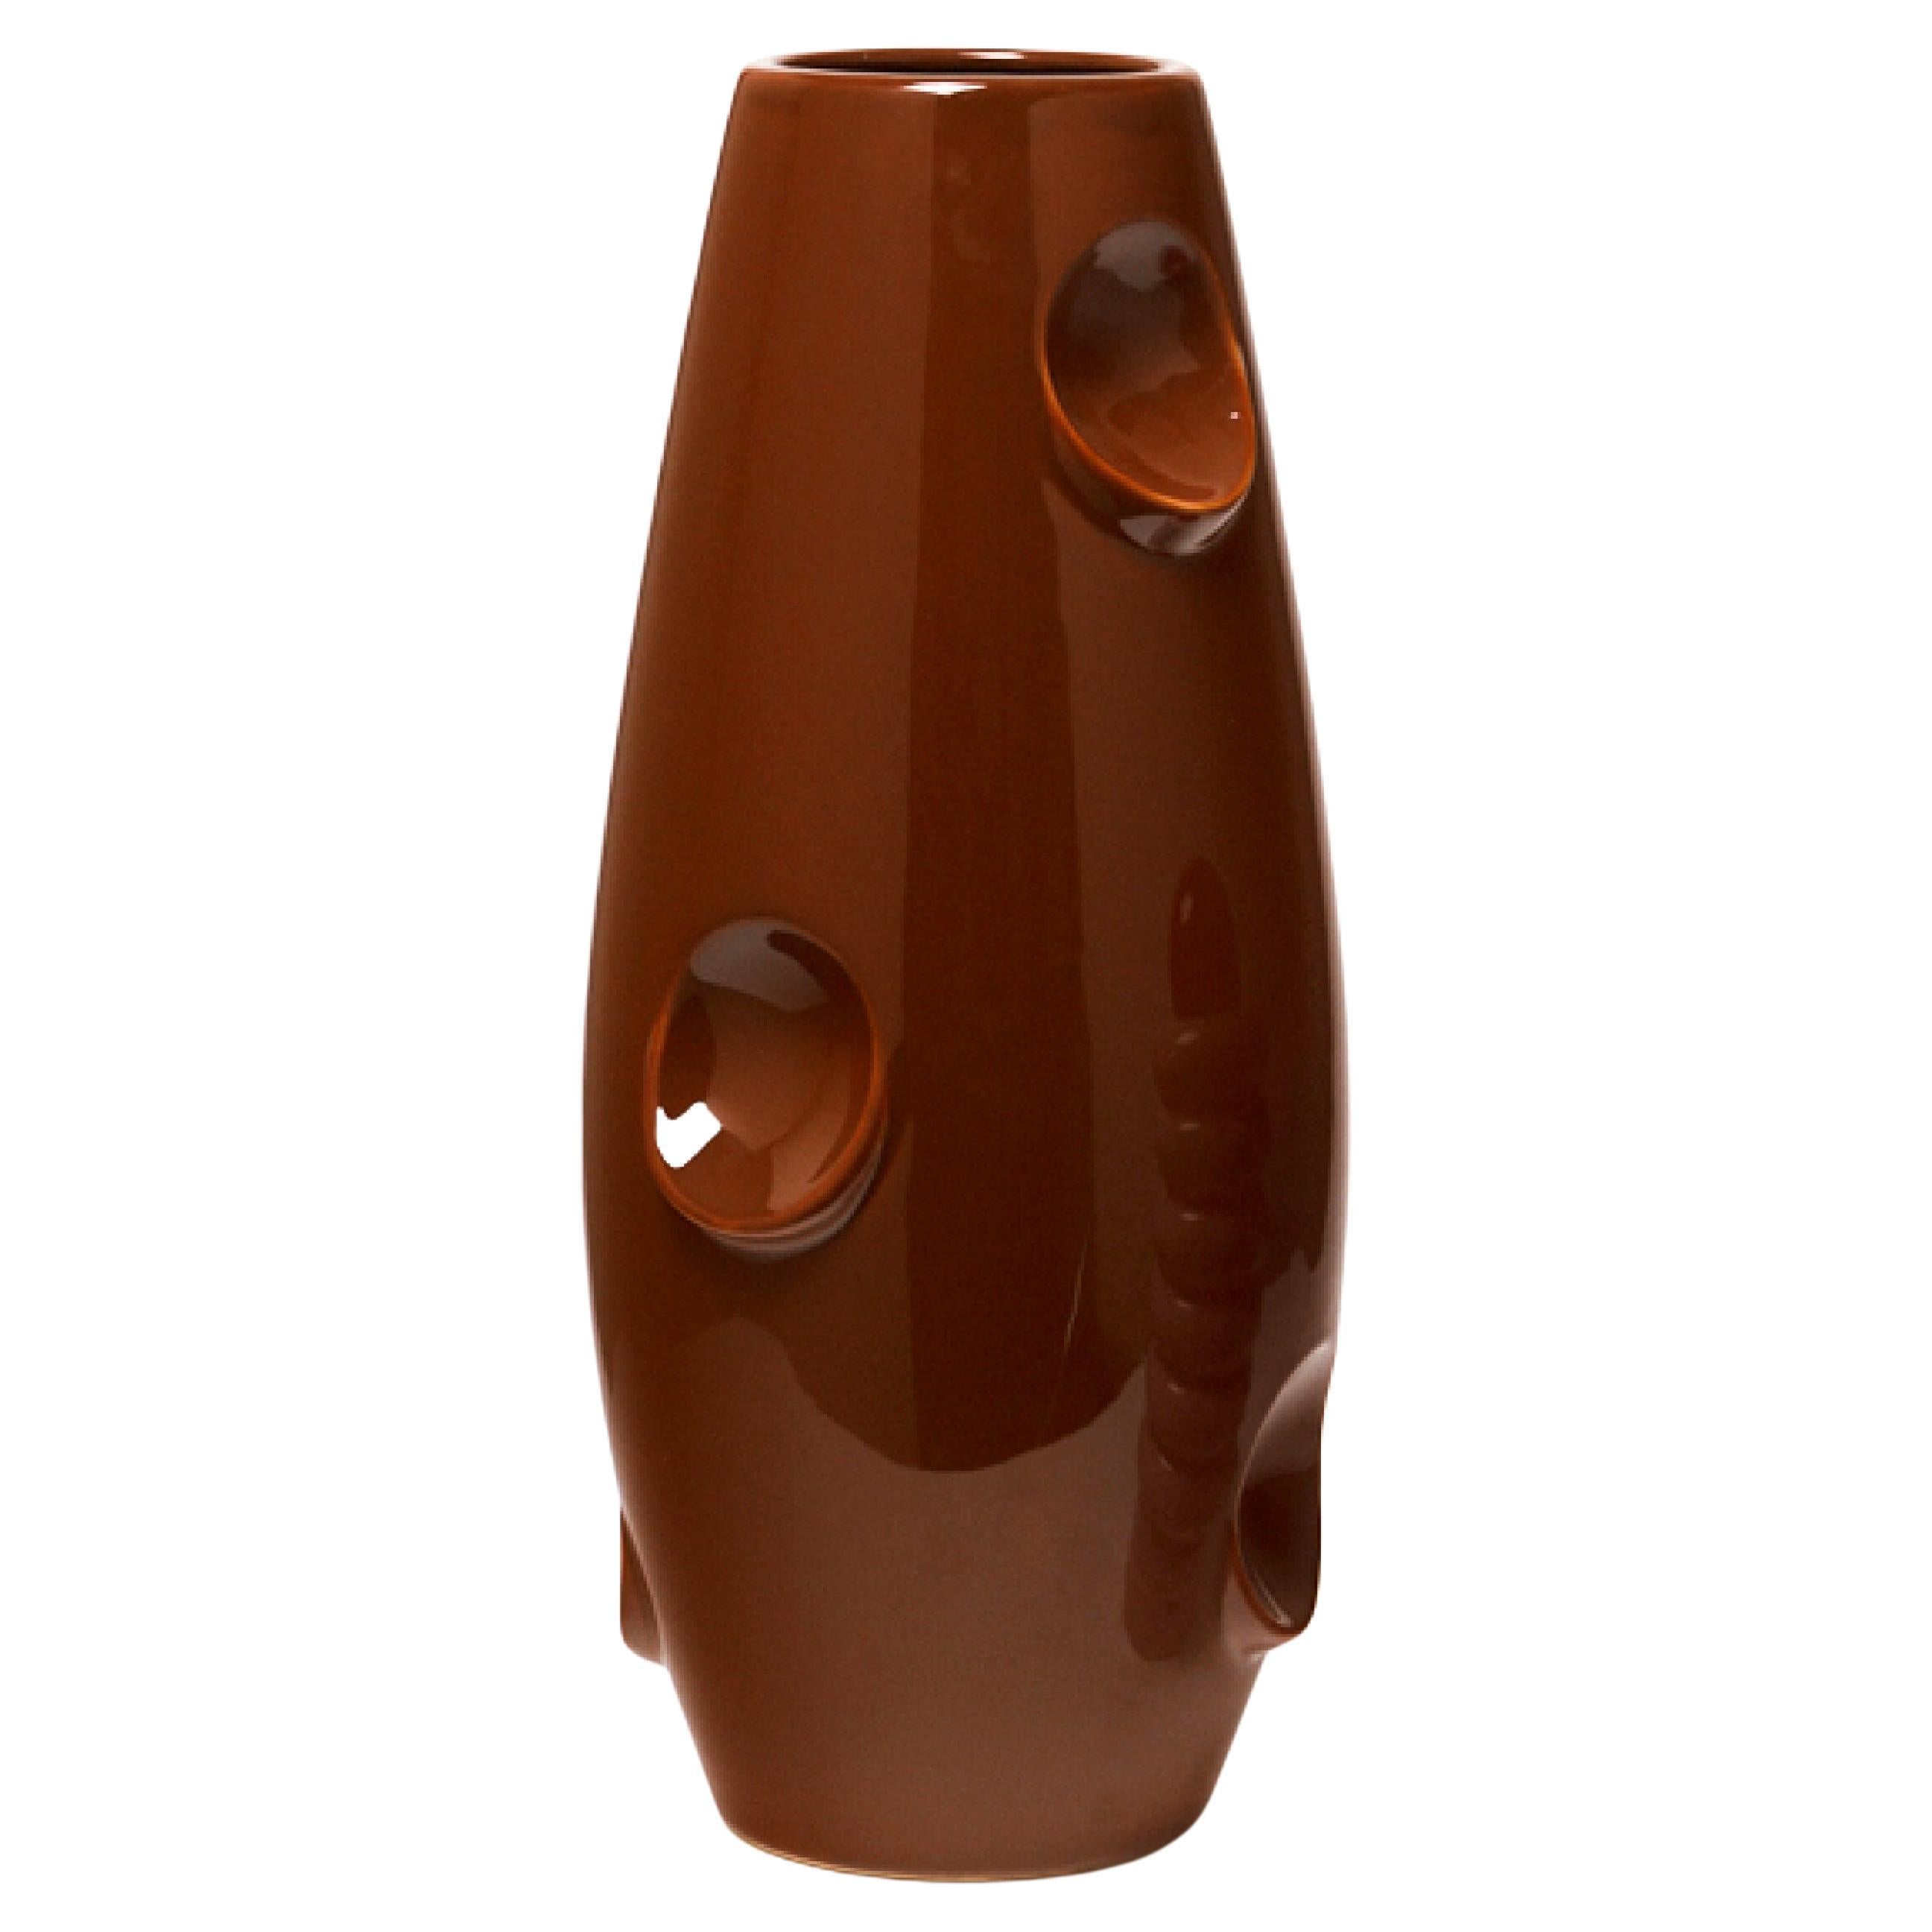 Oko / Choco Brown Vase by Malwina Konopacka For Sale